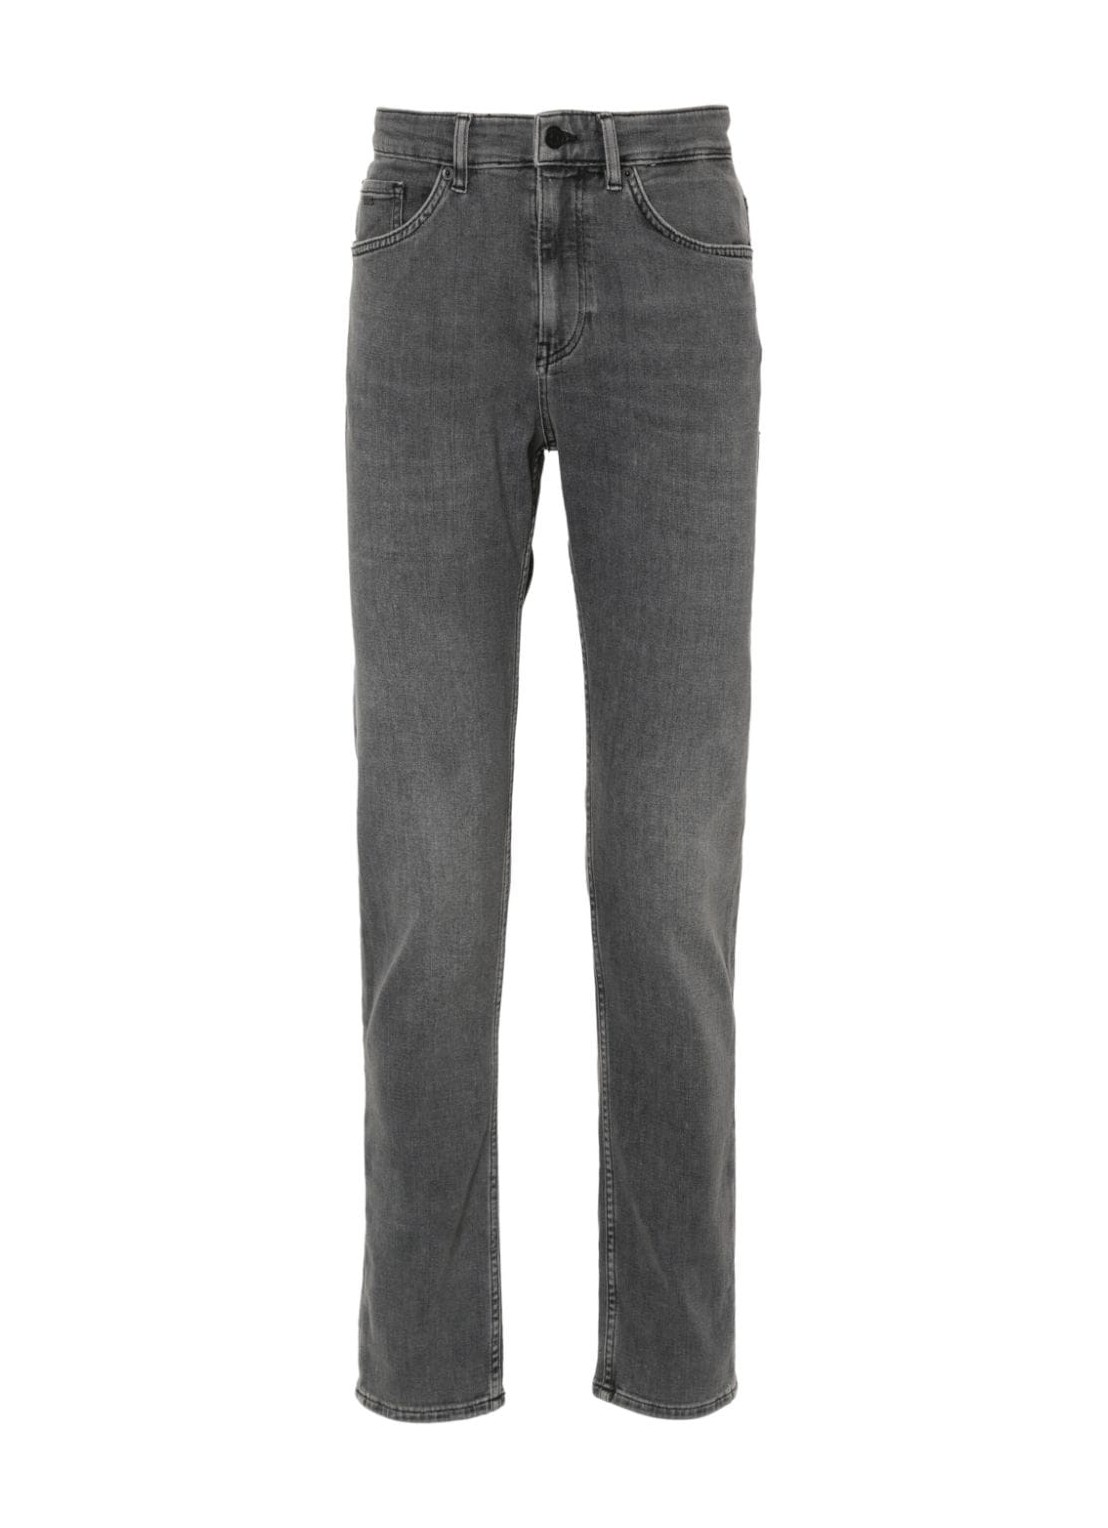 Pantalon jeans boss denim mantaber - 50508114 021 talla 34
 